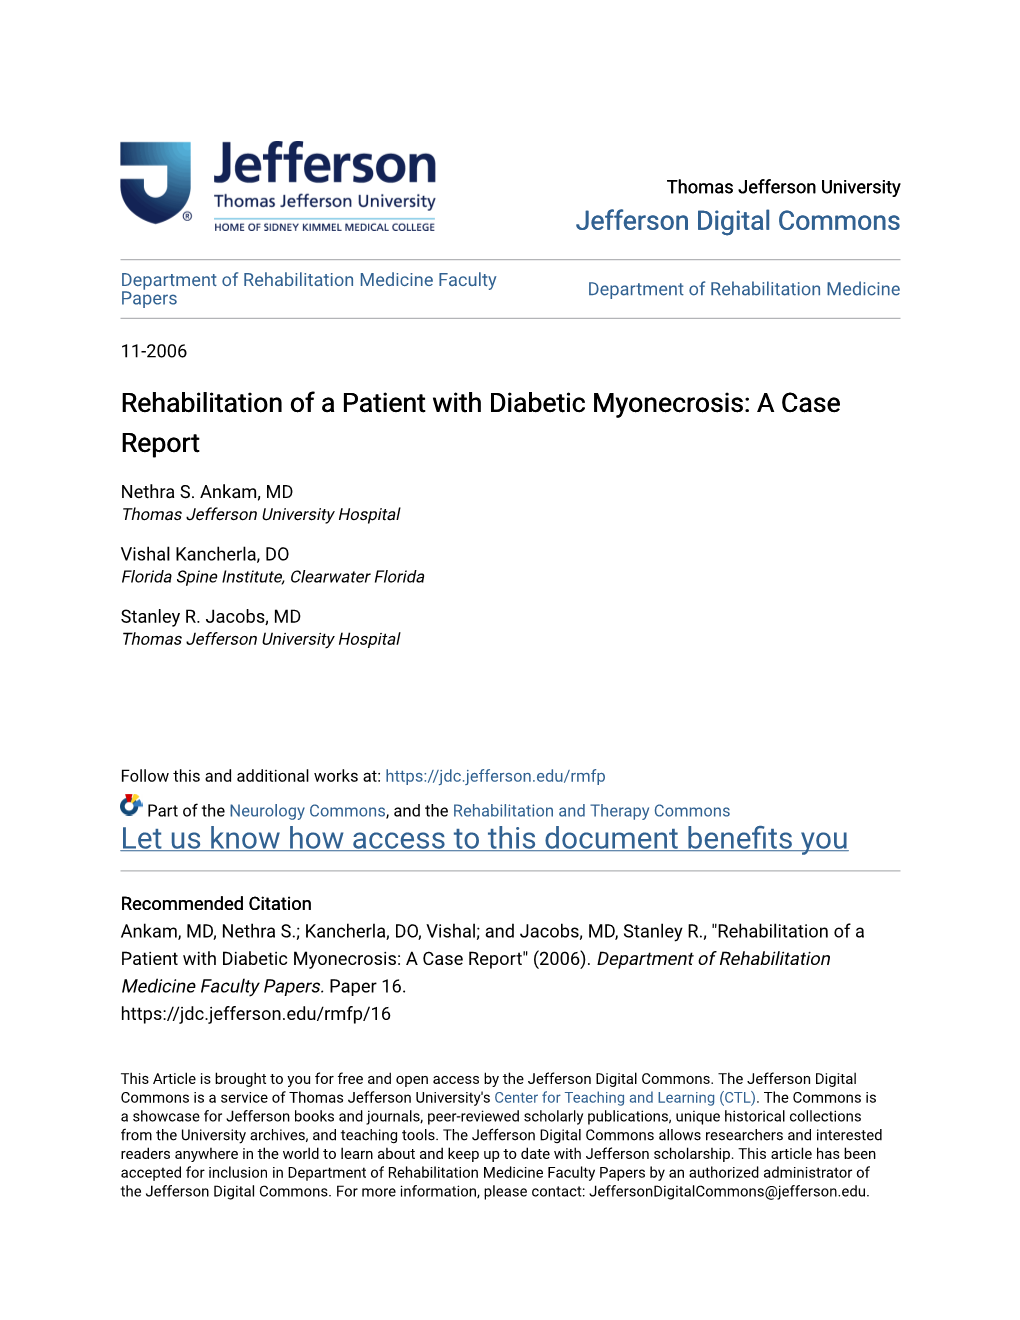 Rehabilitation of a Patient with Diabetic Myonecrosis: a Case Report